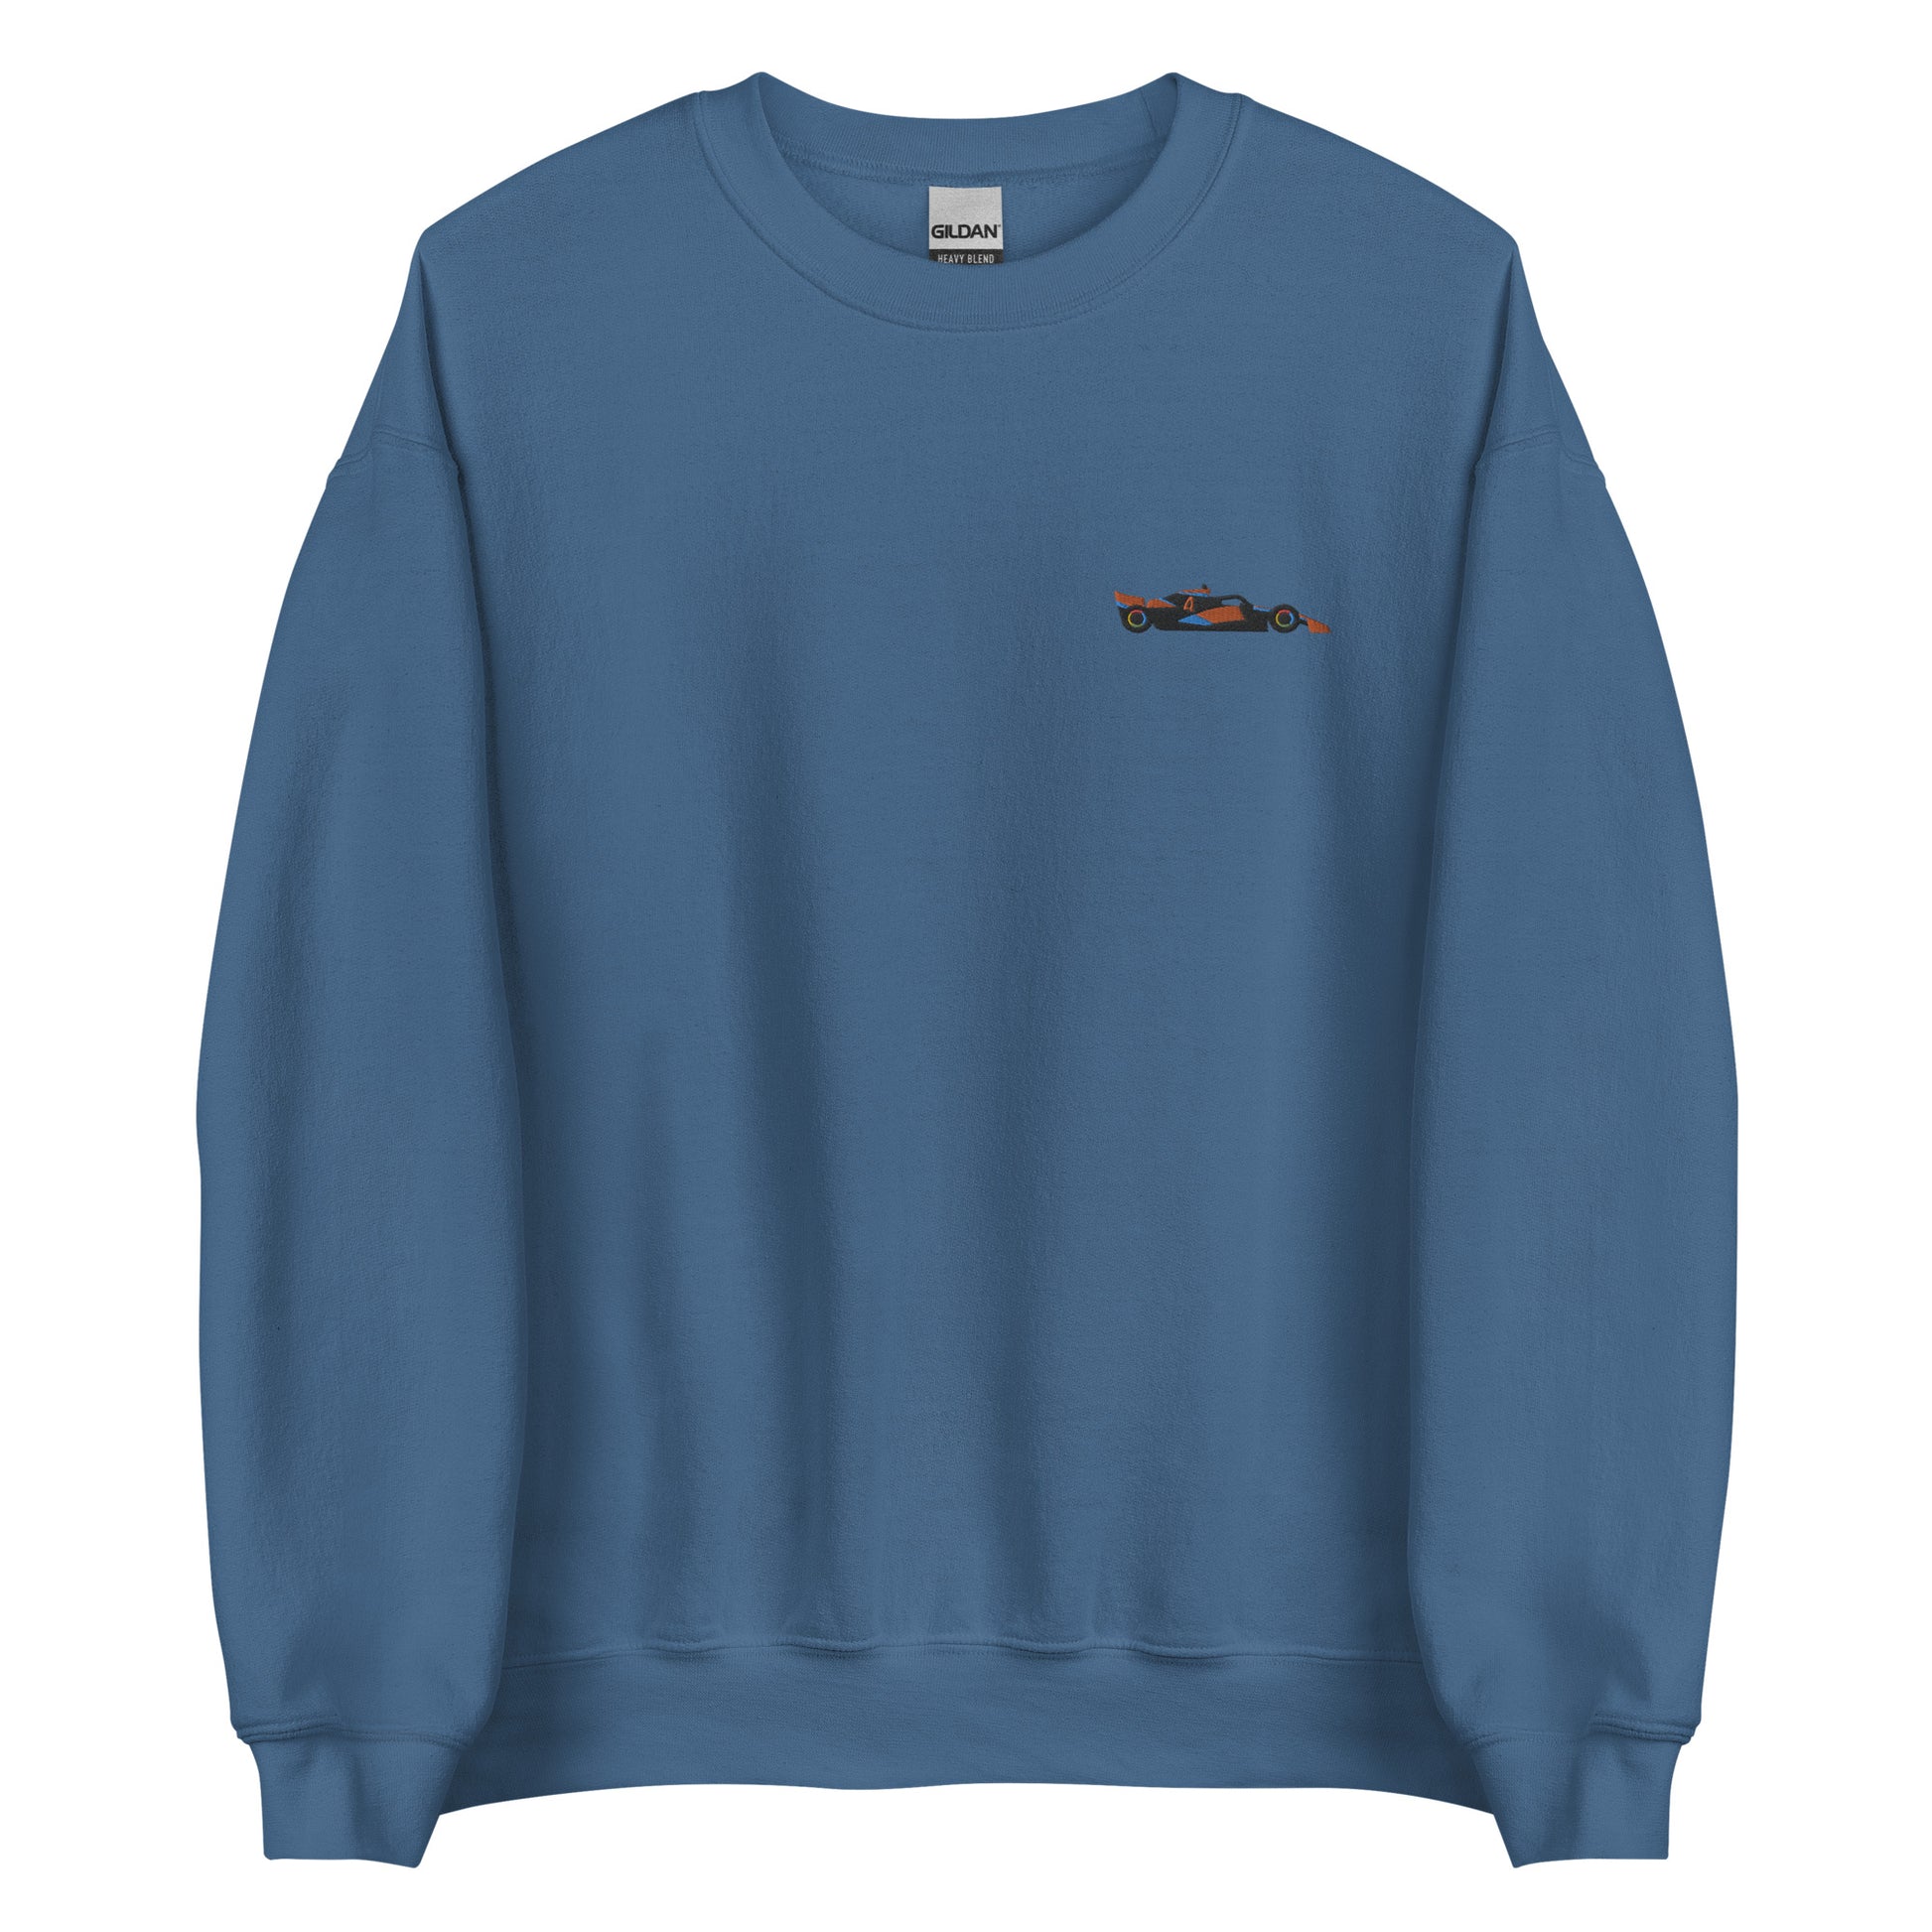 Embroidered mclaren f1 car sweater indigo blue